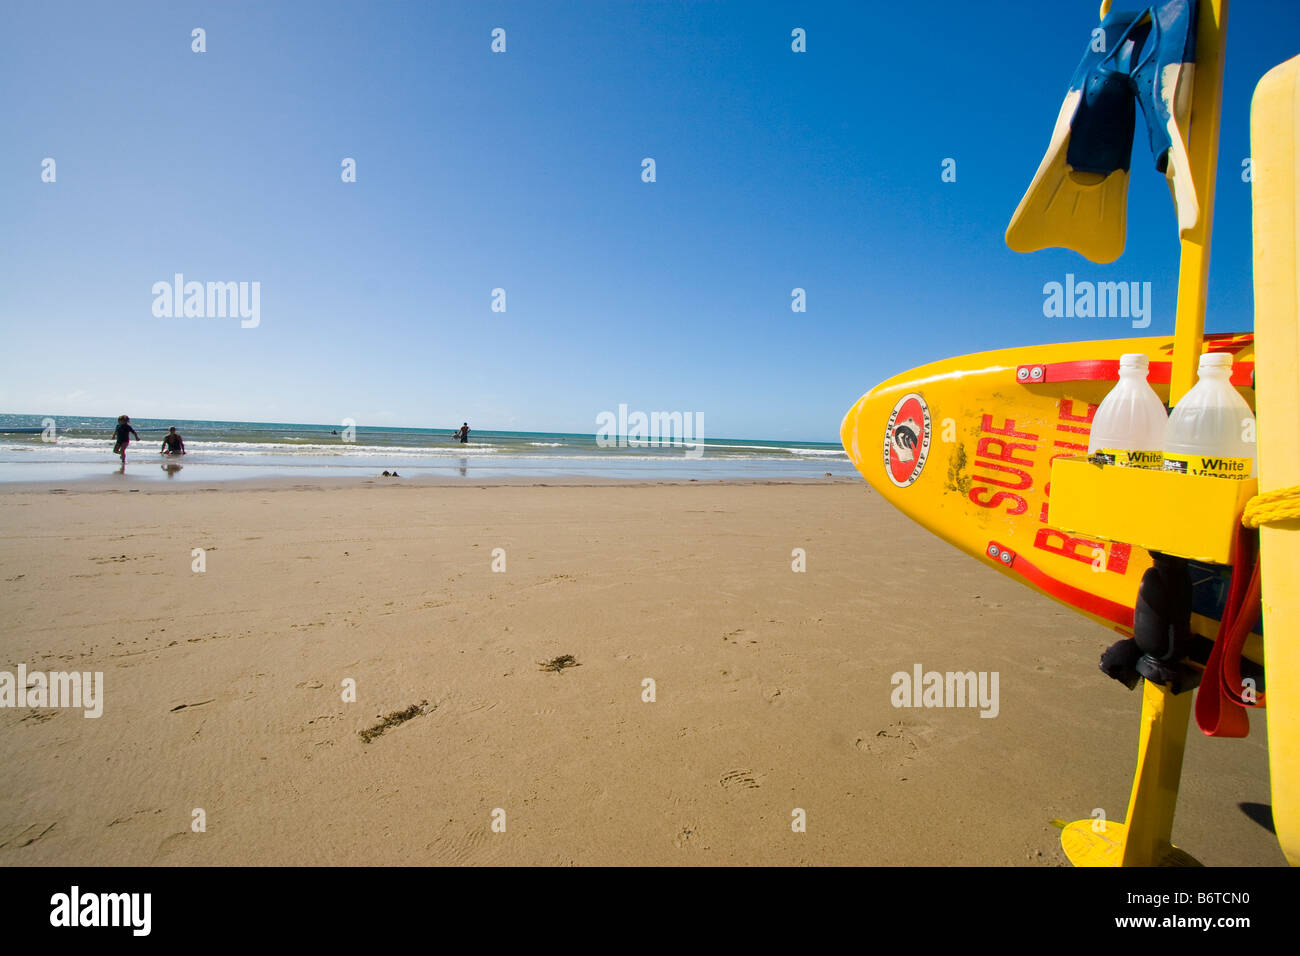 The iconic yellow surf ski is a well-known symbol of Australia's surf lifesavers. Port Douglas, Queensland, Australia Stock Photo